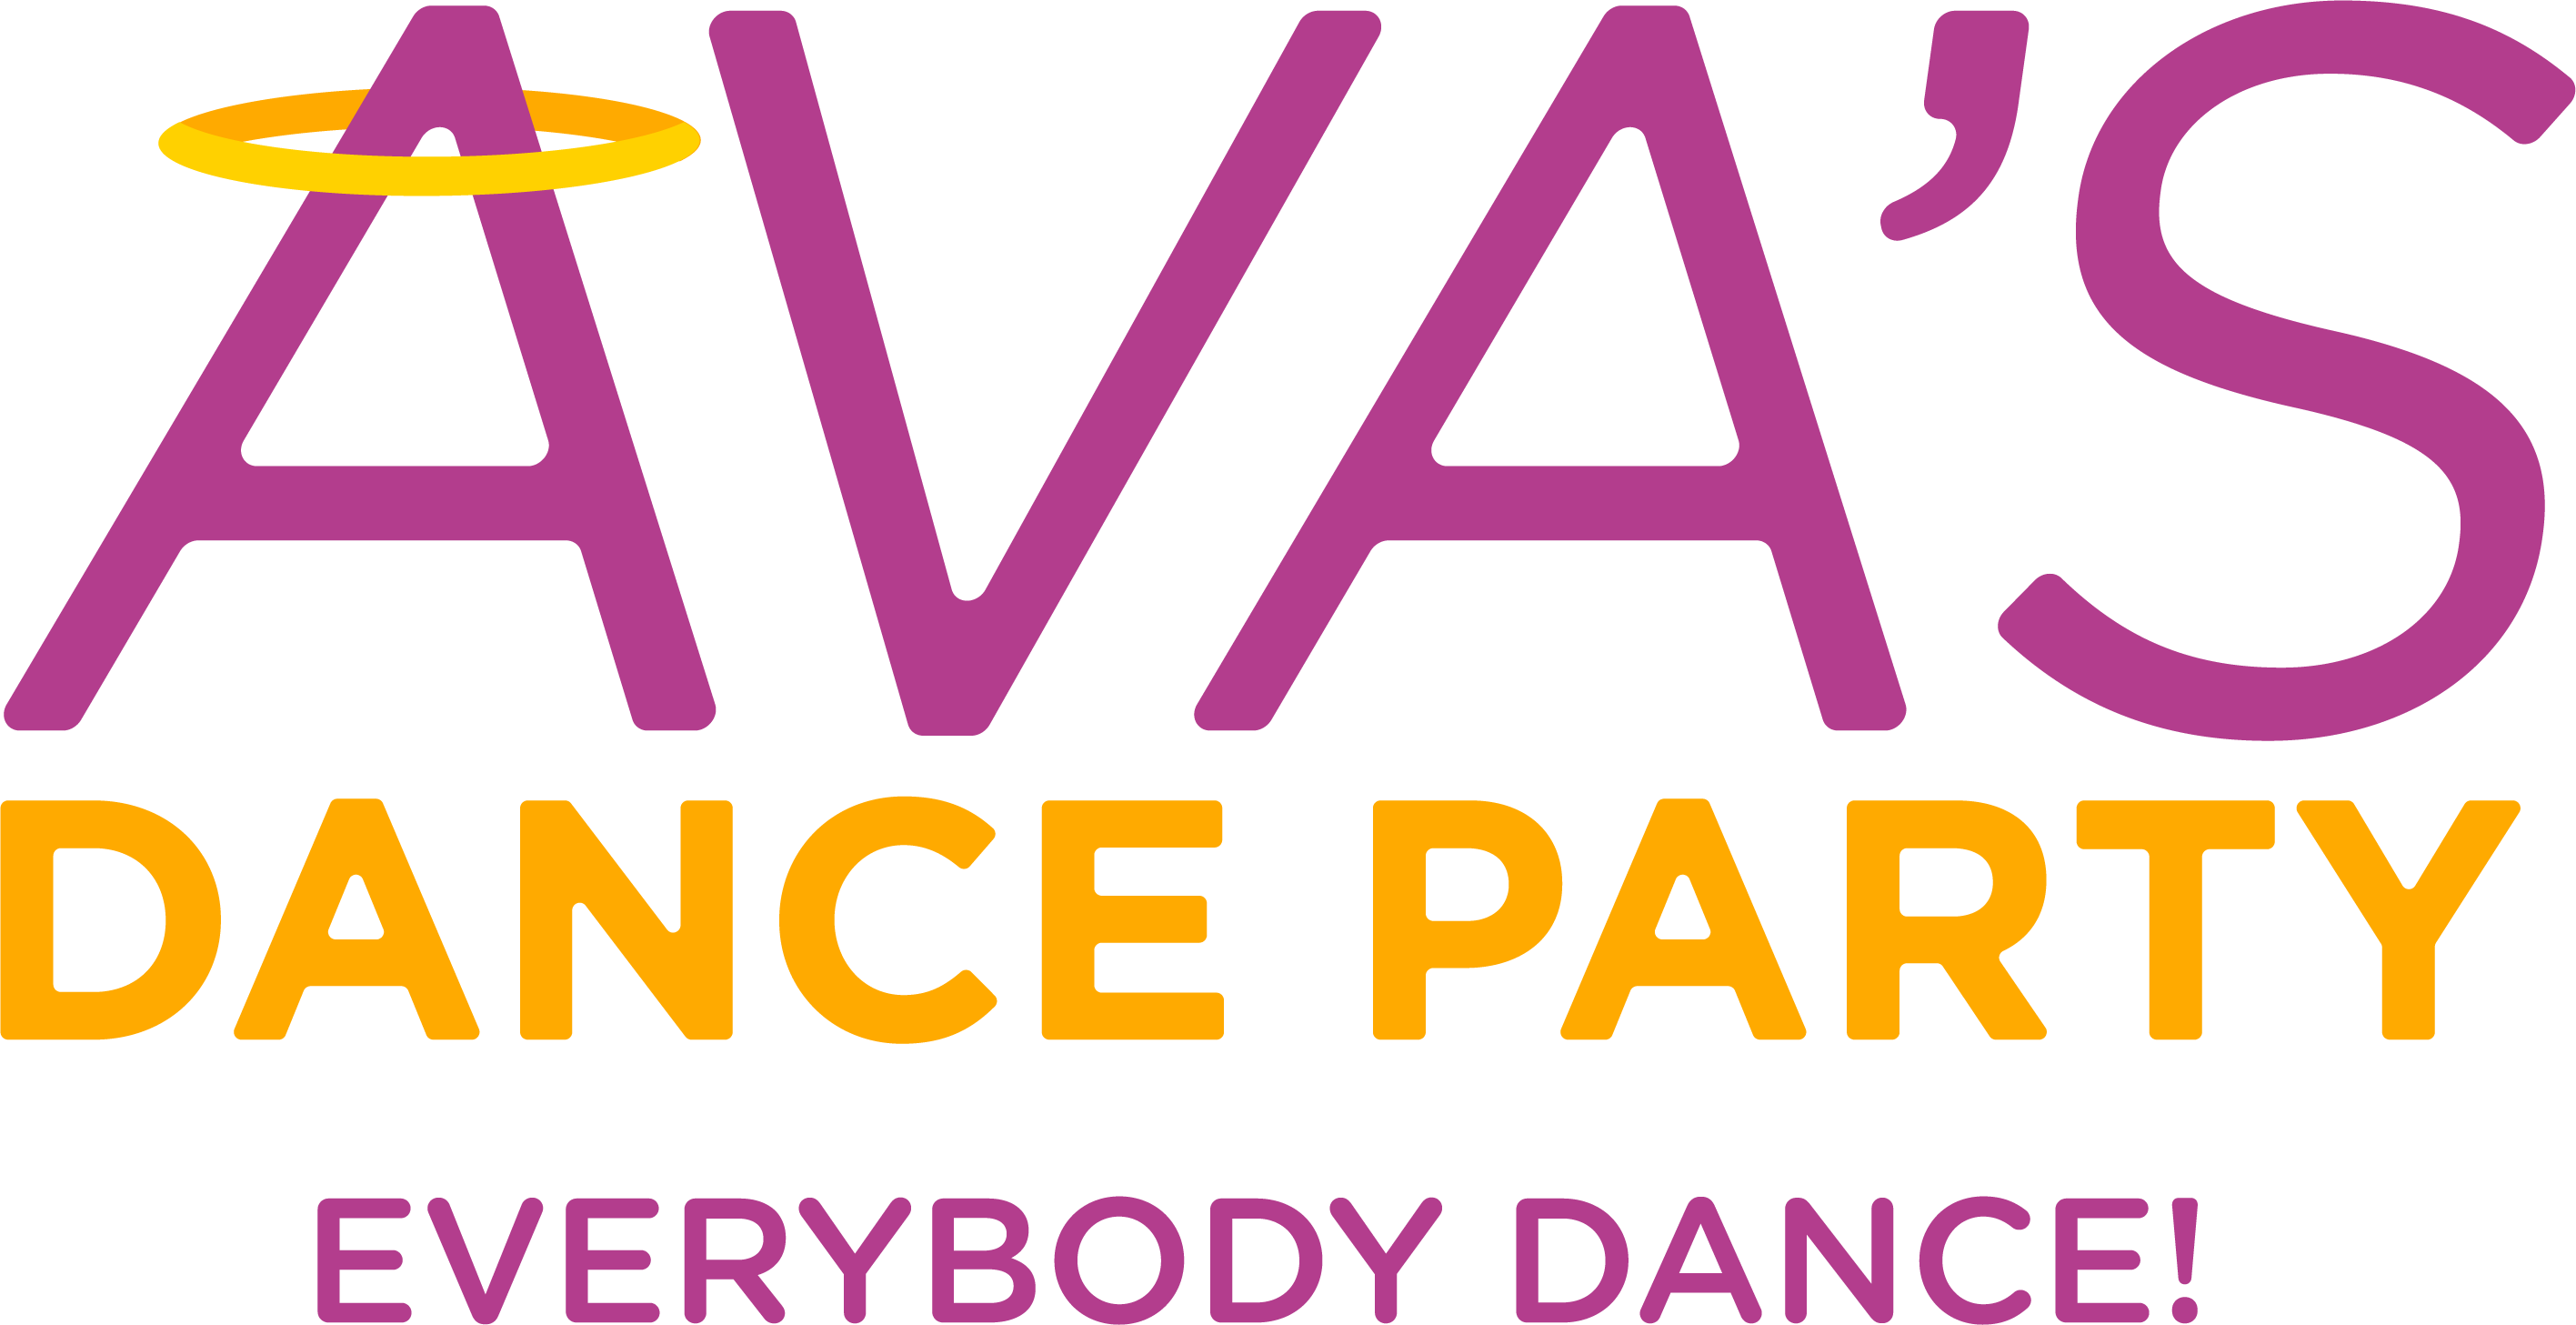 Ava's Dance Party logo